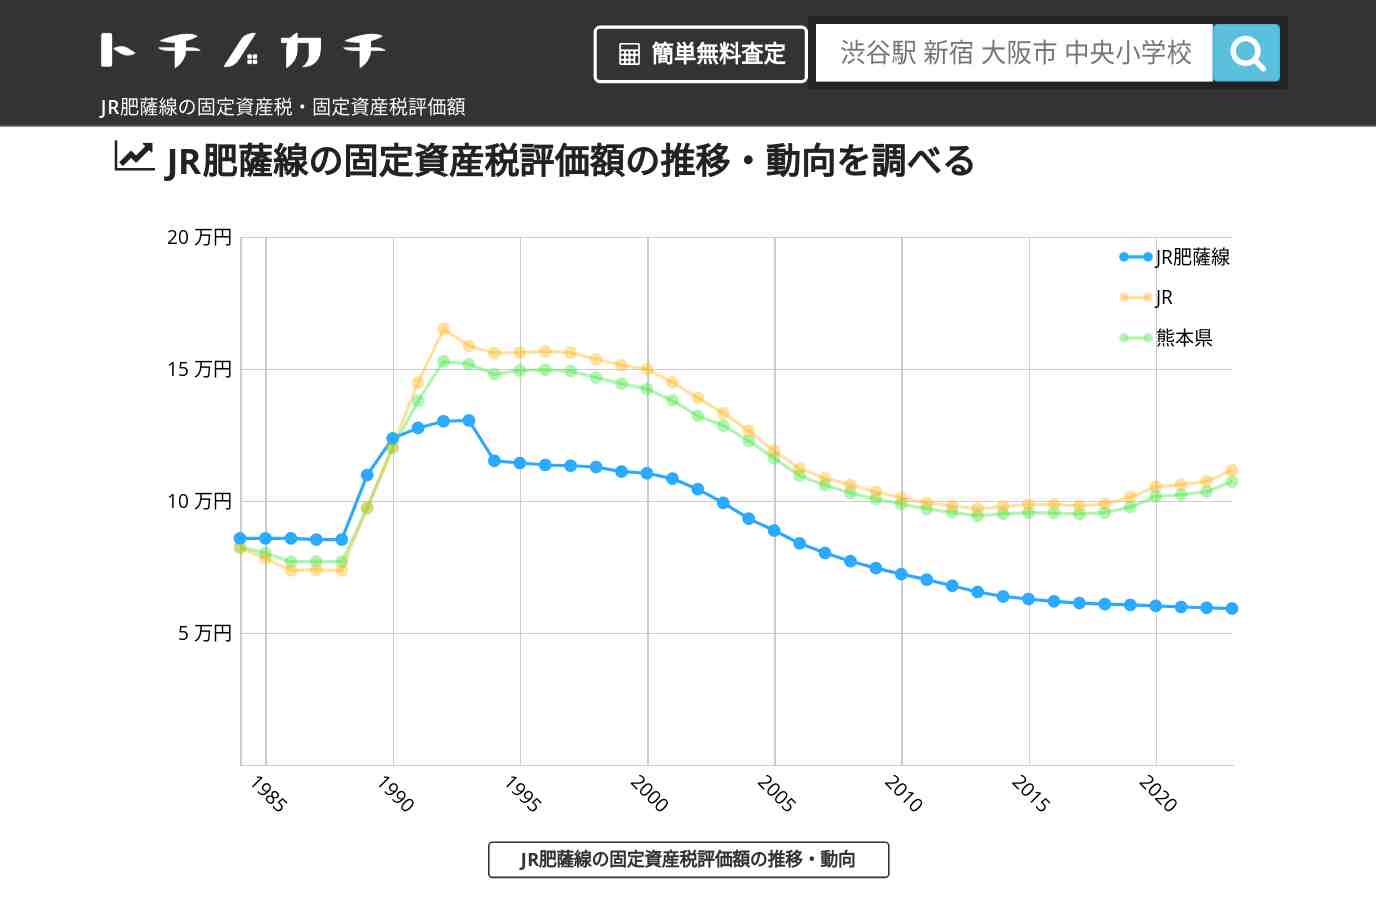 JR肥薩線(JR)の固定資産税・固定資産税評価額 | トチノカチ